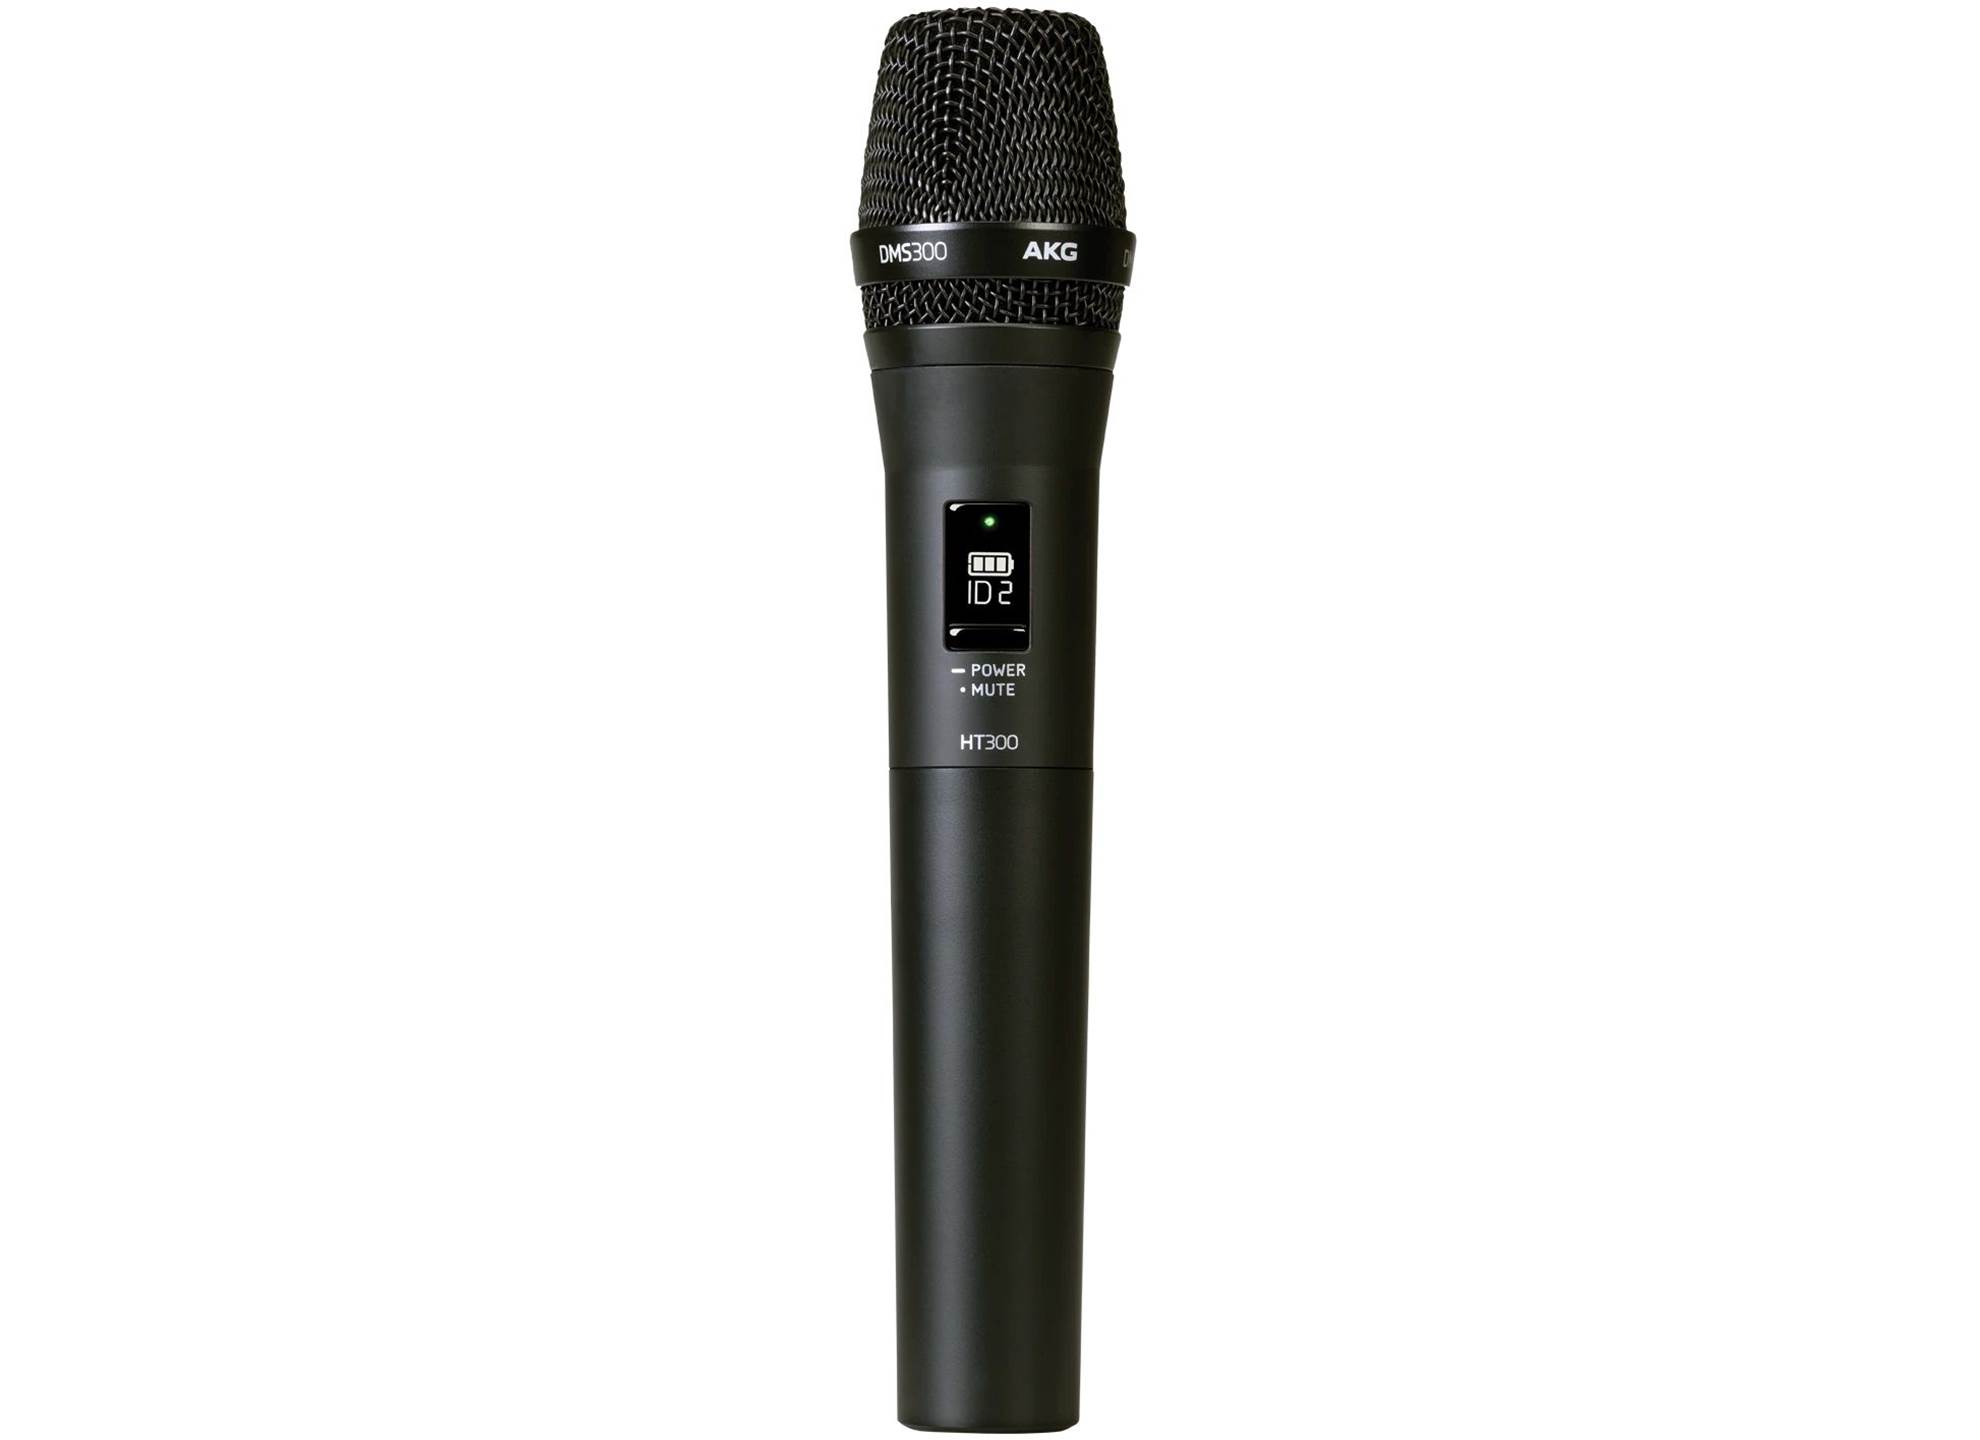 DMS300 Vocal